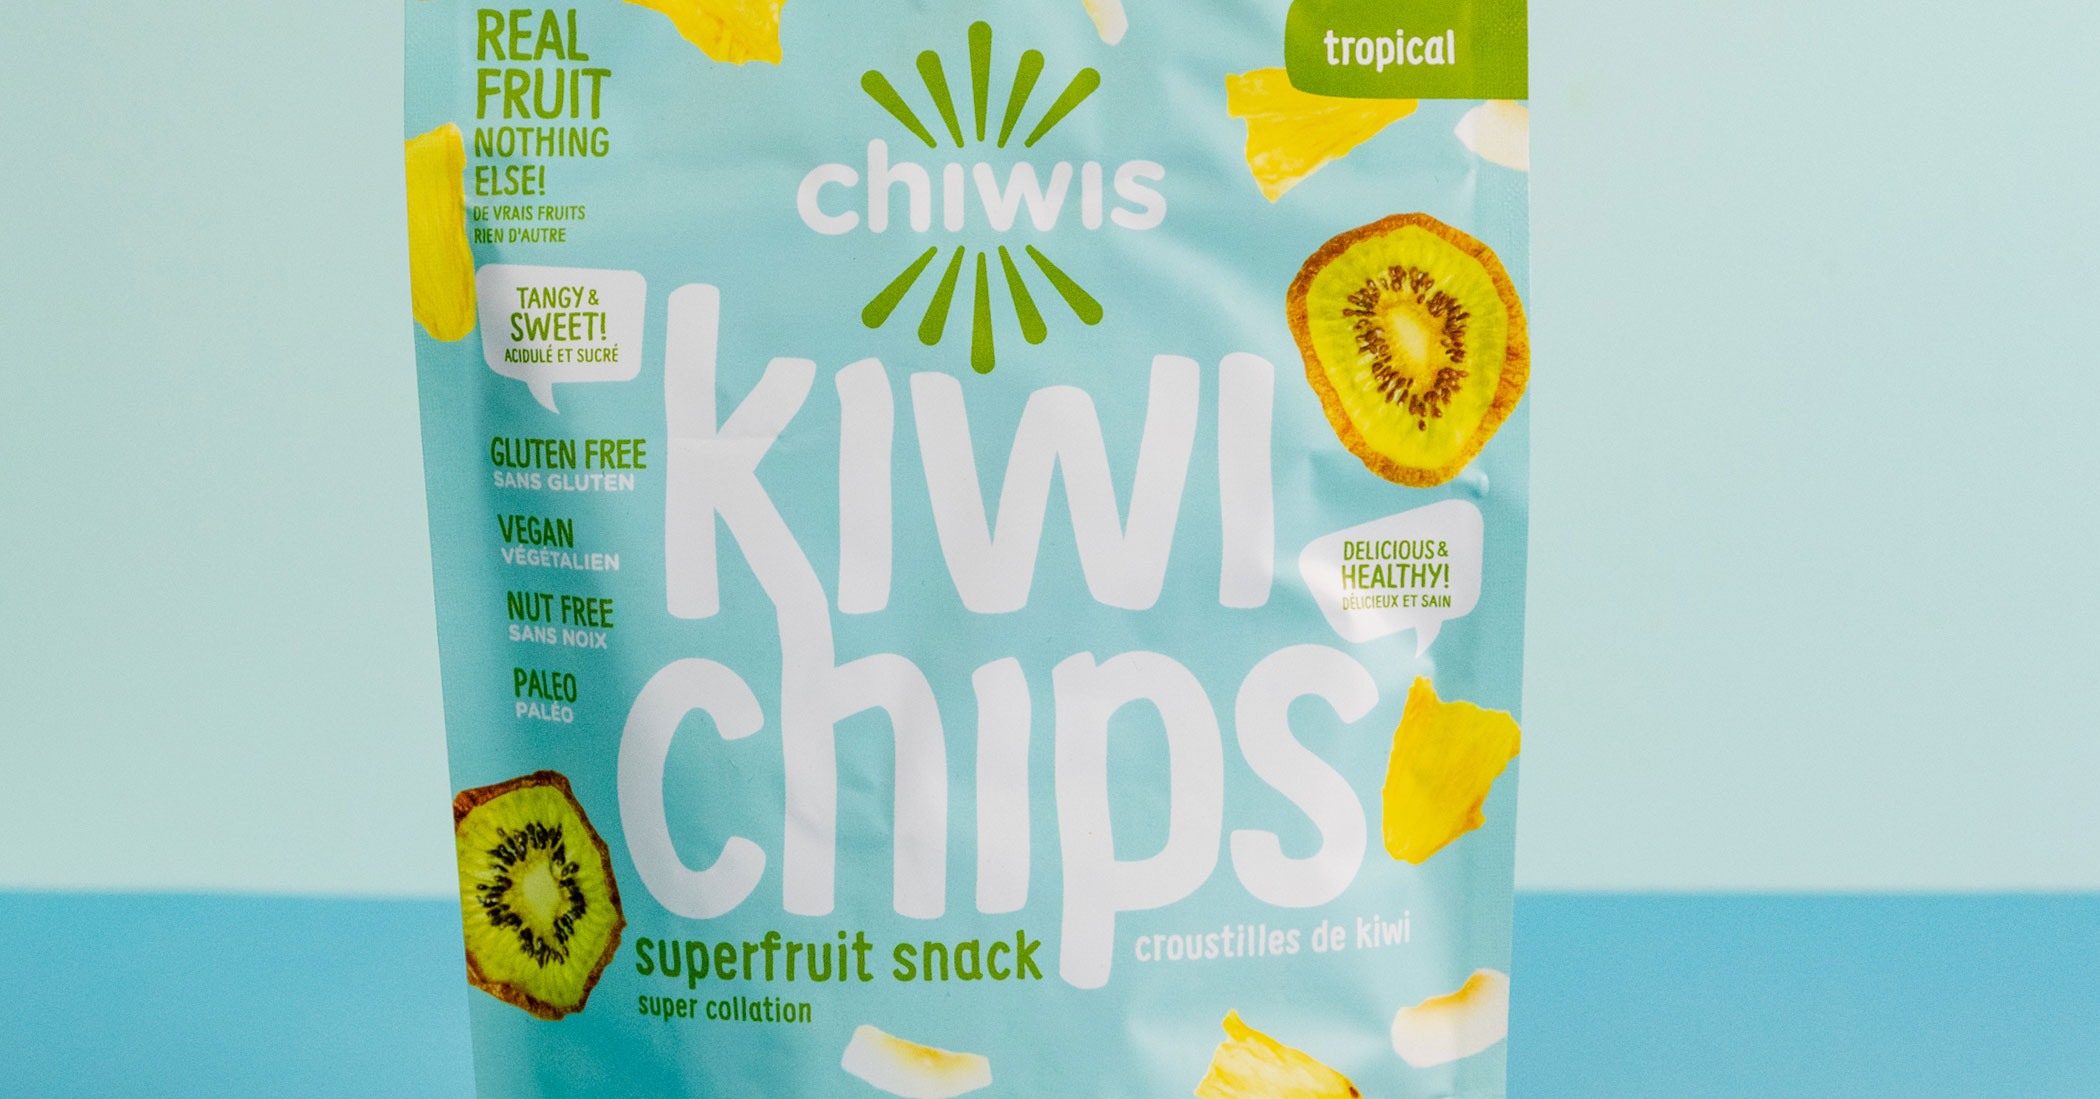 https://zestybrands.ca/wp-content/uploads/2022/10/Vancouver-branding-companies-package-designer-agency-zesty-branding-chiwis-kiwi-chips-tropical.jpg